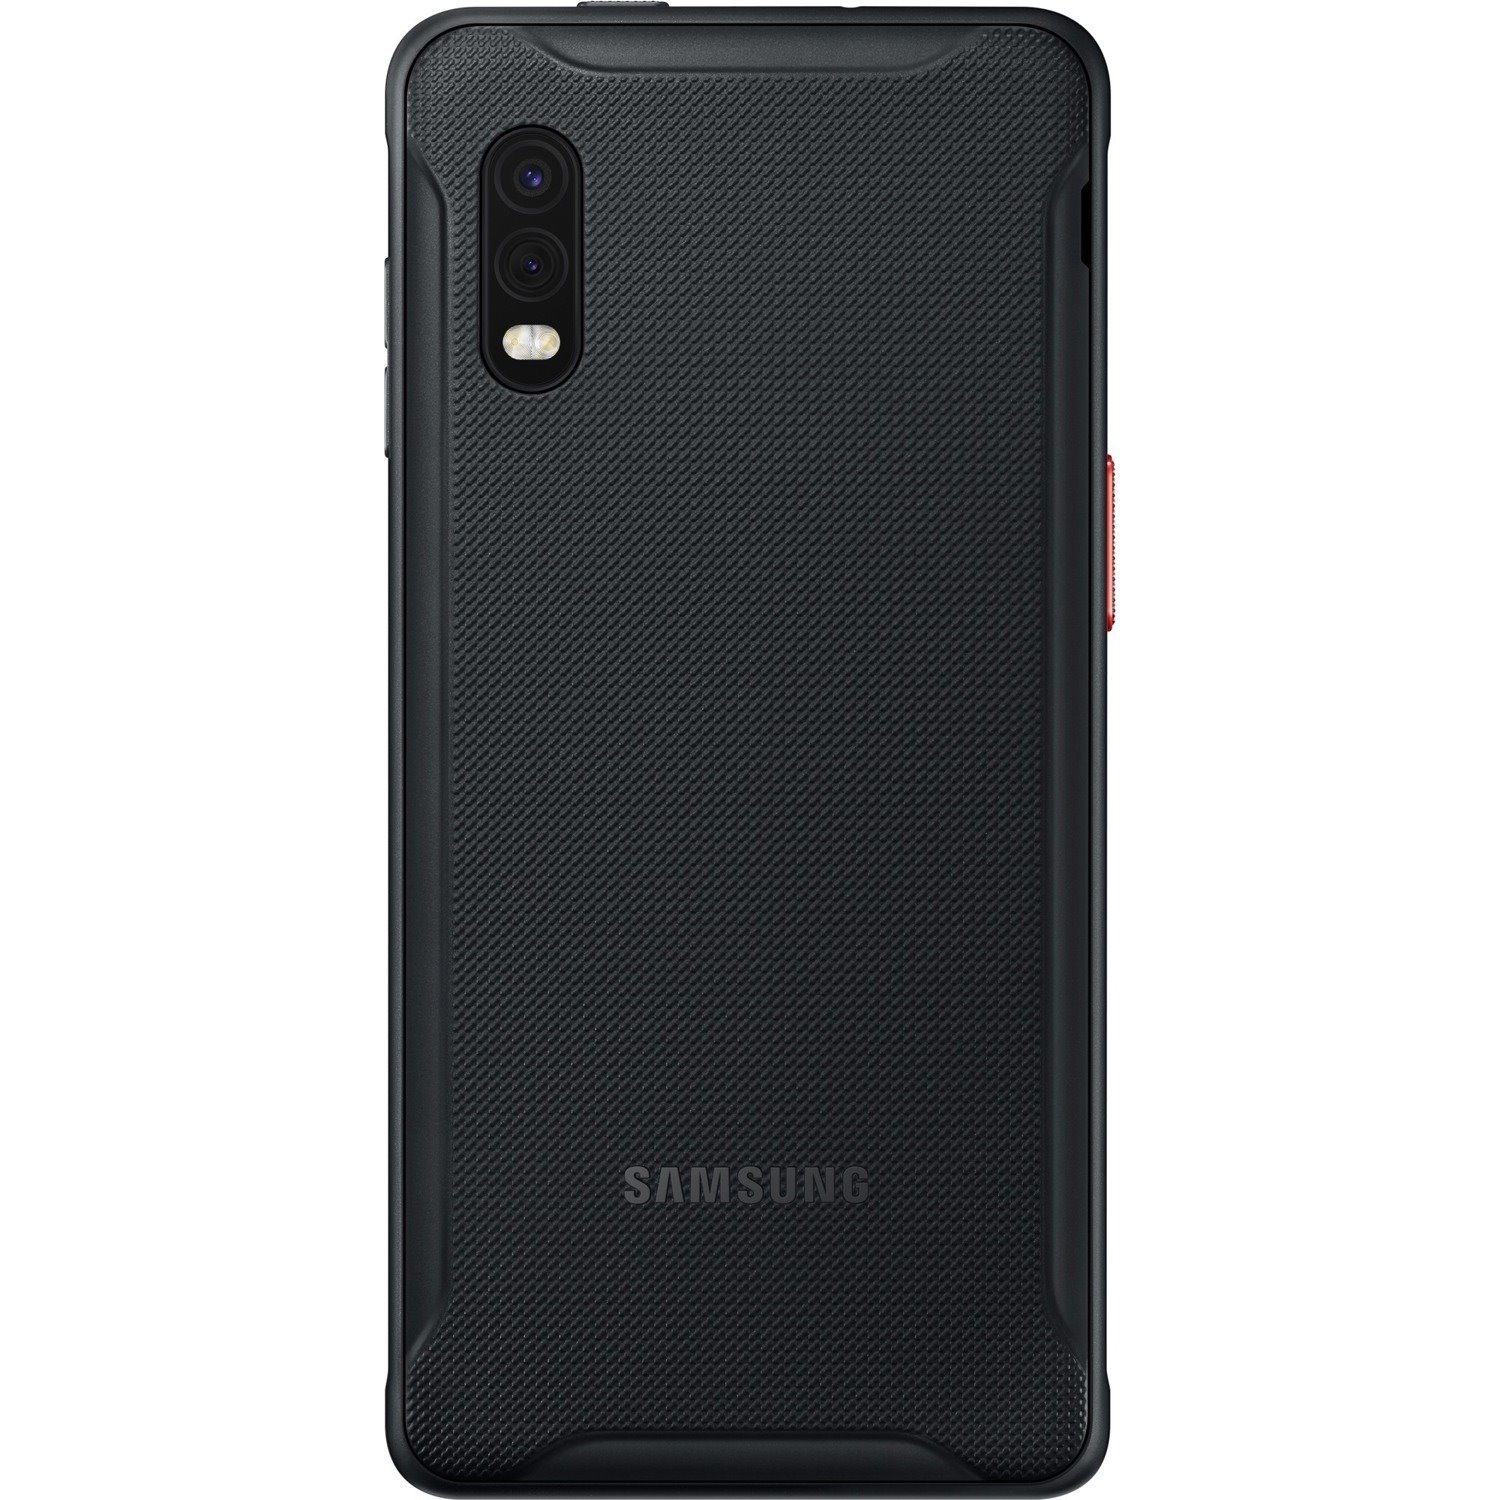 Samsung Galaxy XCover Pro SM-G715U1 64 GB Smartphone - 6.3" TFT LCD Full HD Plus 2340 x 1080 - Octa-core (Cortex A73Quad-core (4 Core) 2.30 GHz + Cortex A53 Quad-core (4 Core) 1.70 GHz - 4 GB RAM - Android 10 - 4G - Black